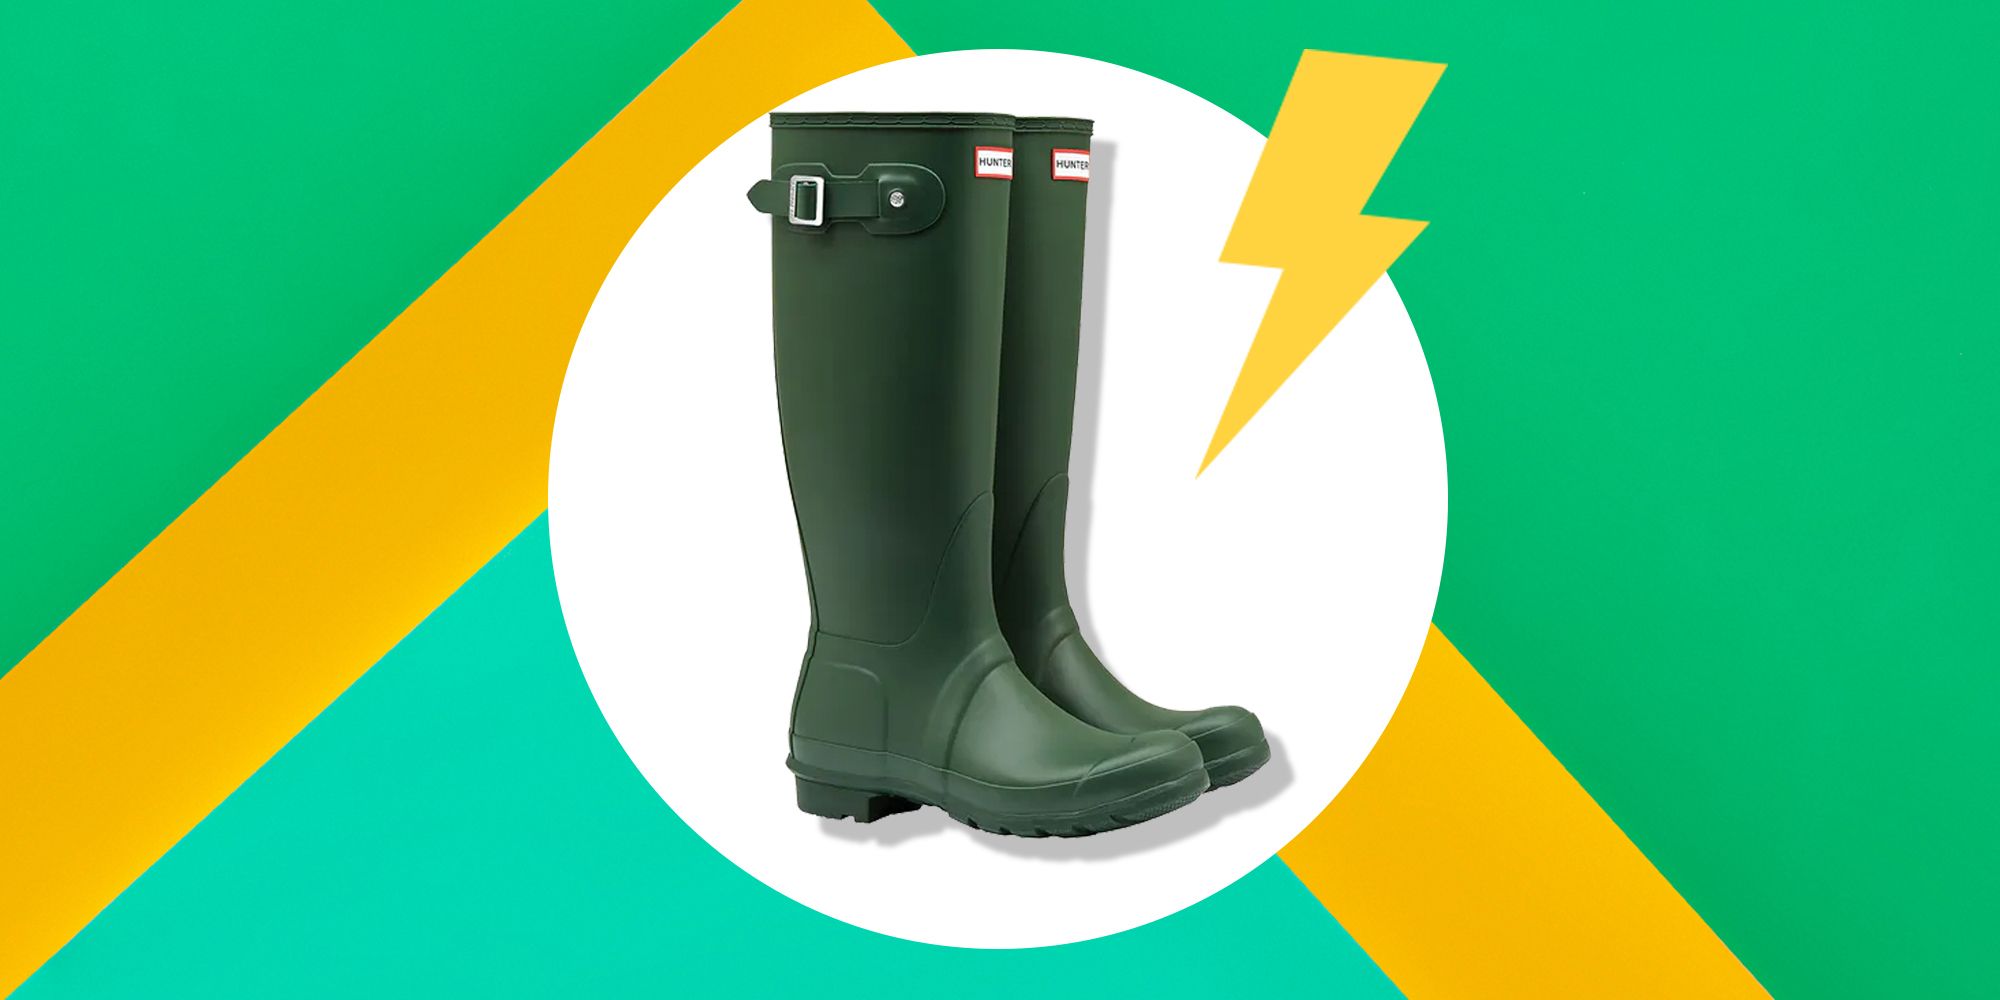 hunter rain boots on sale